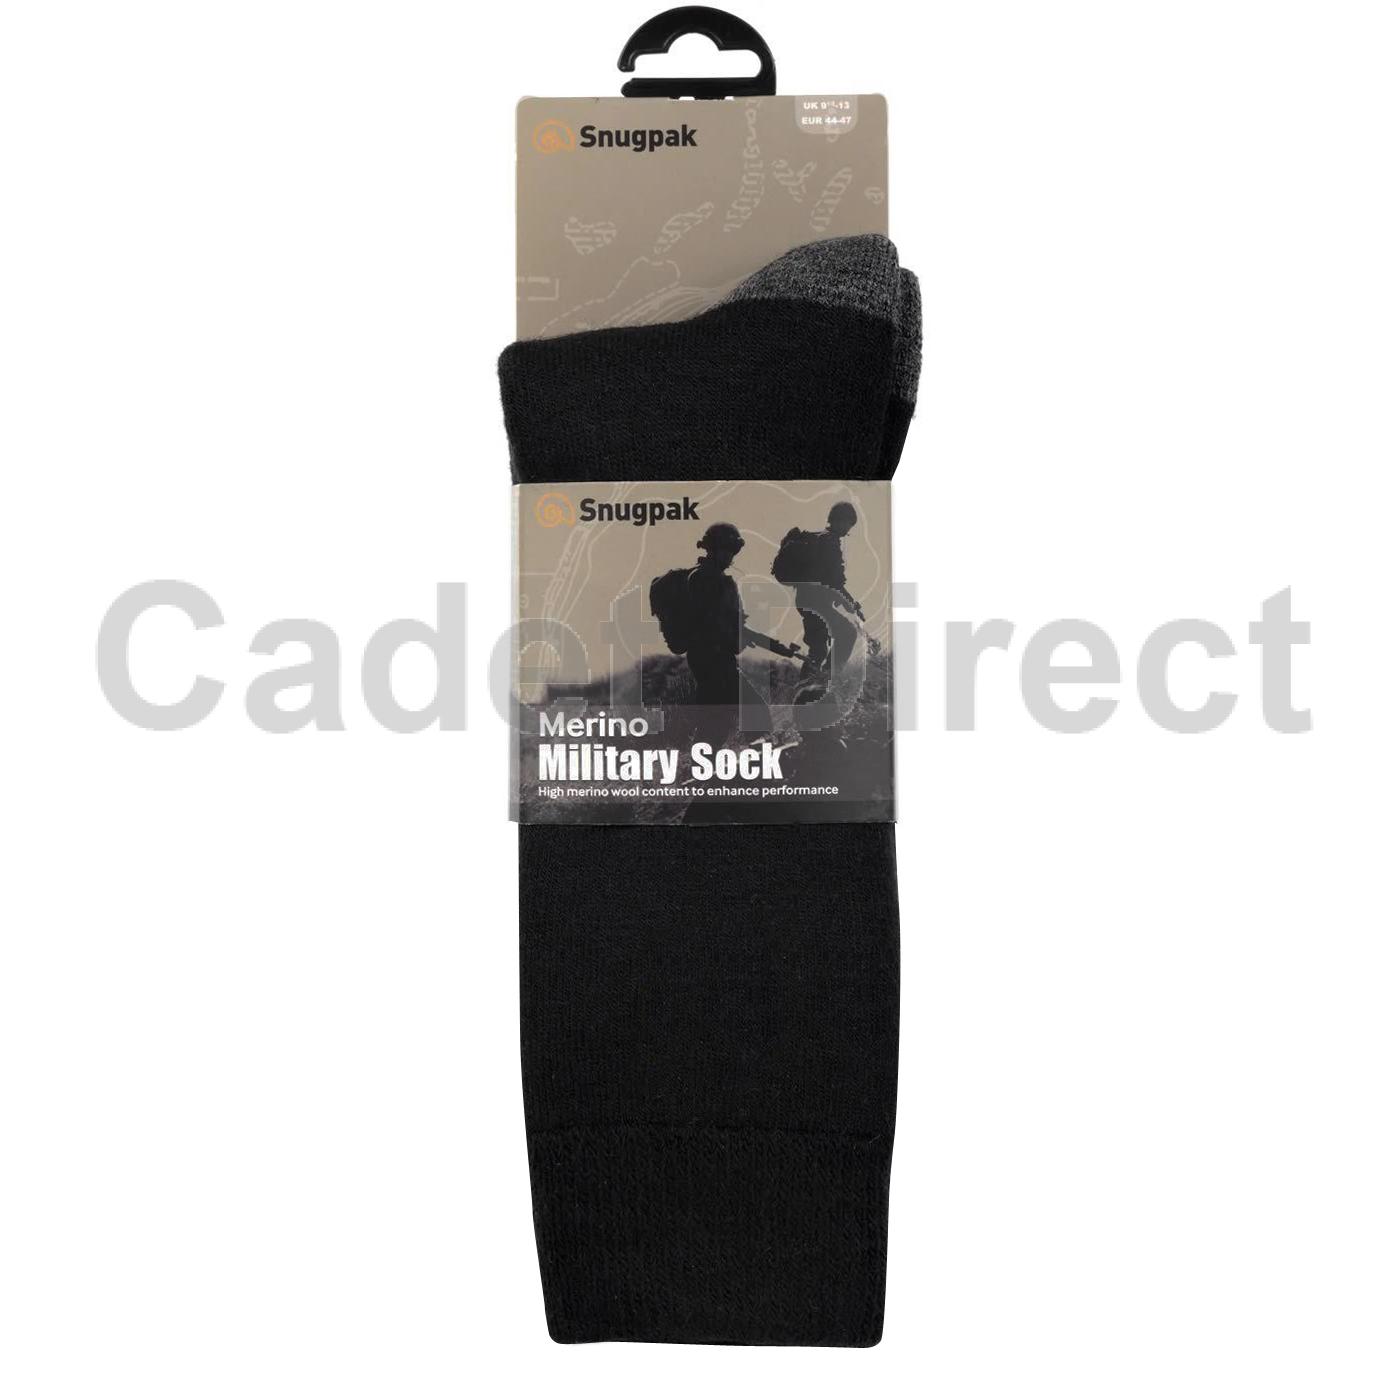 Snugpak Merino militaire Sock Noir